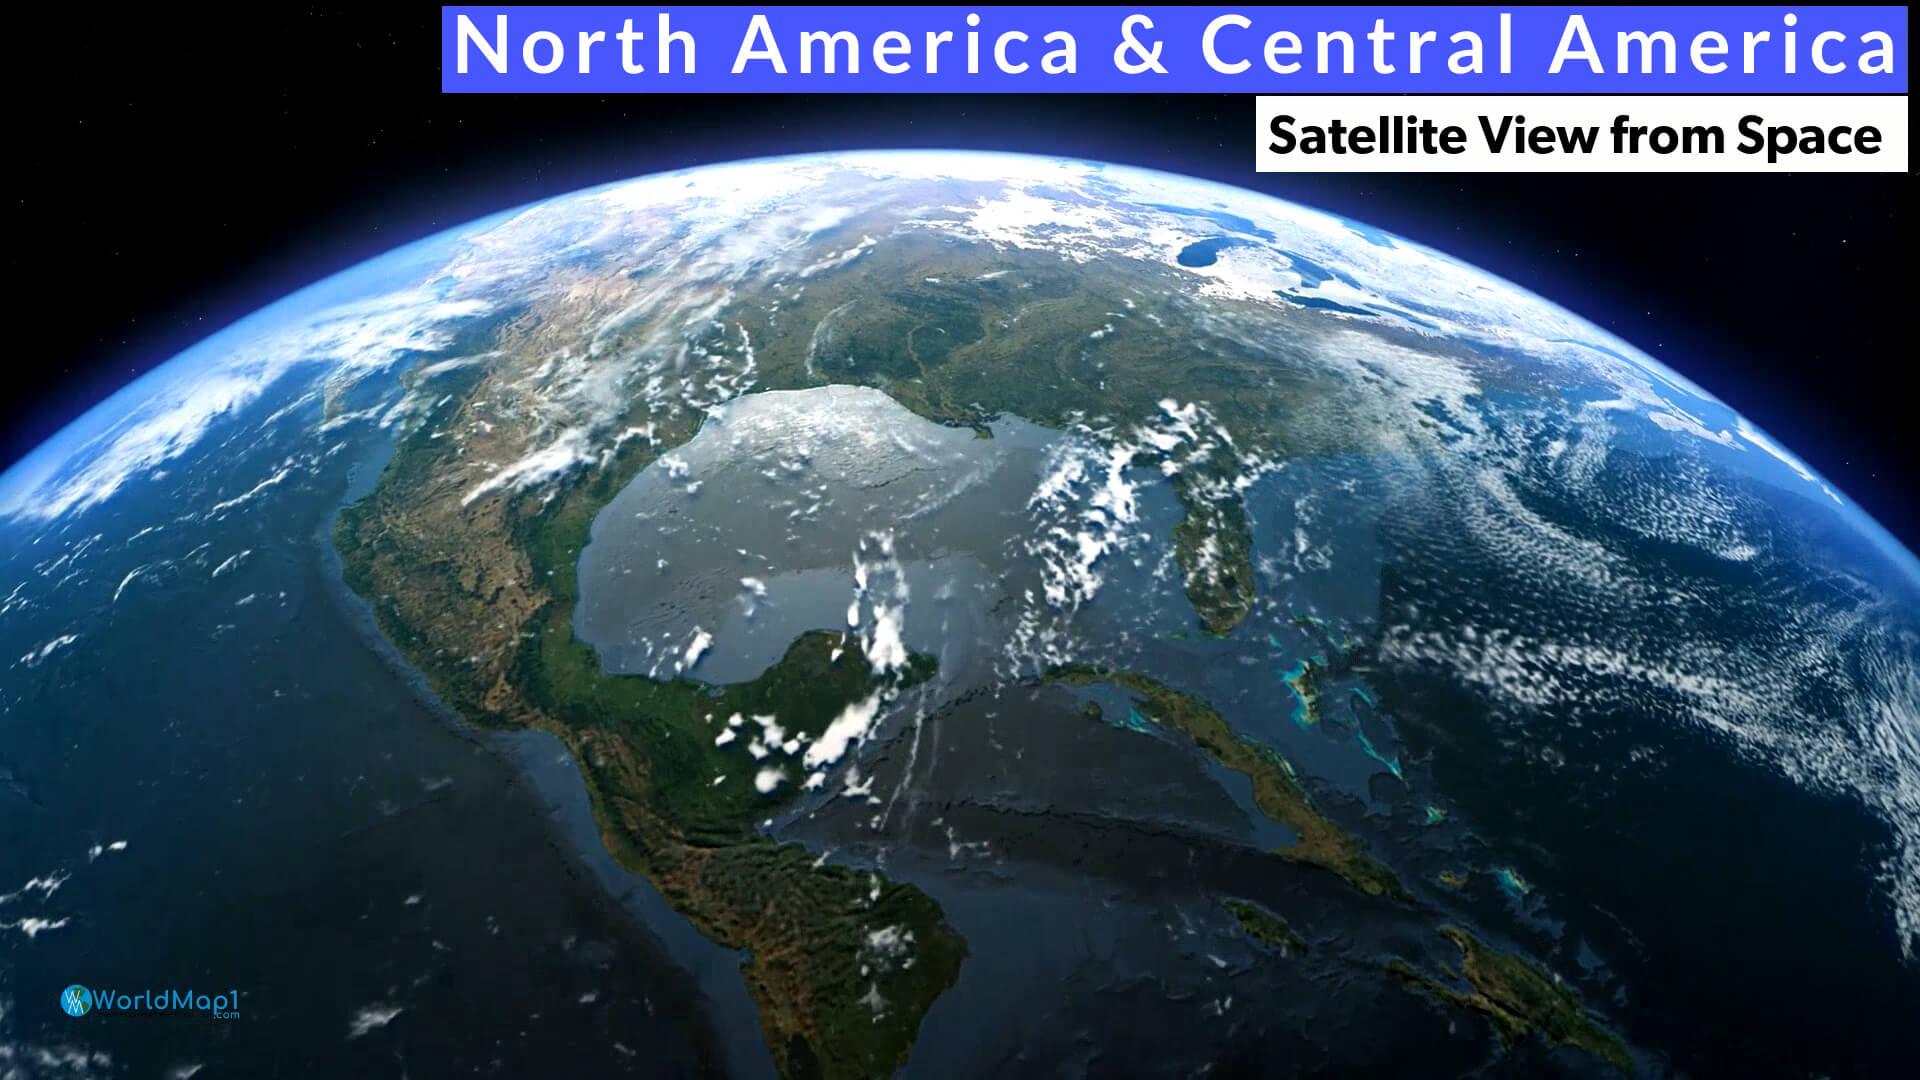 North America and Central America Satellite View